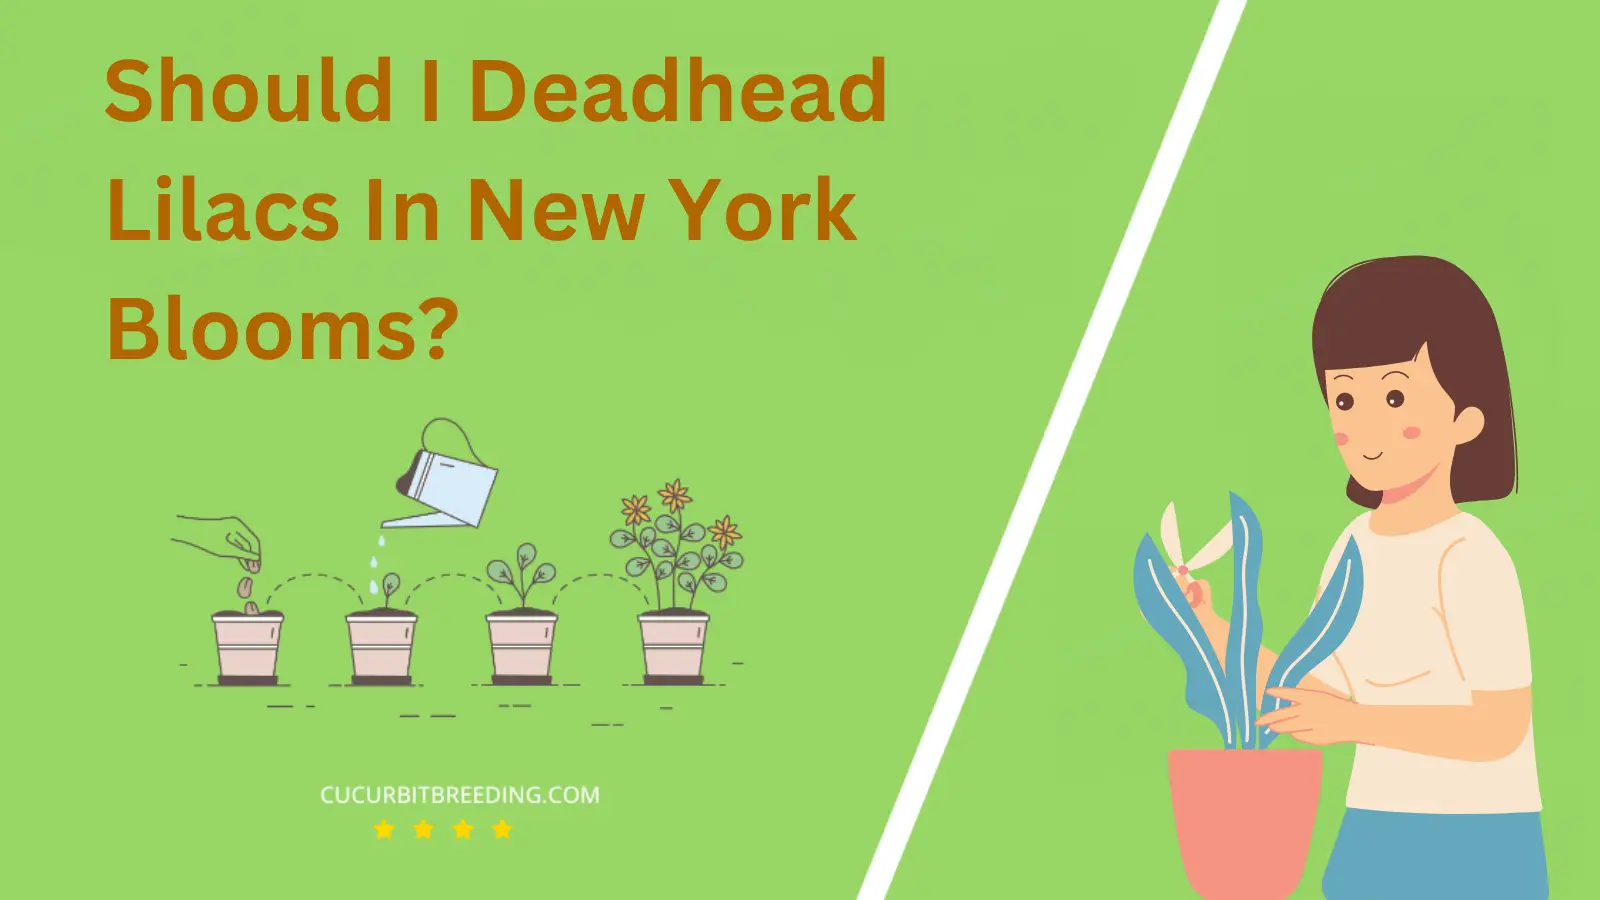 Should I Deadhead Lilacs In New York Blooms?